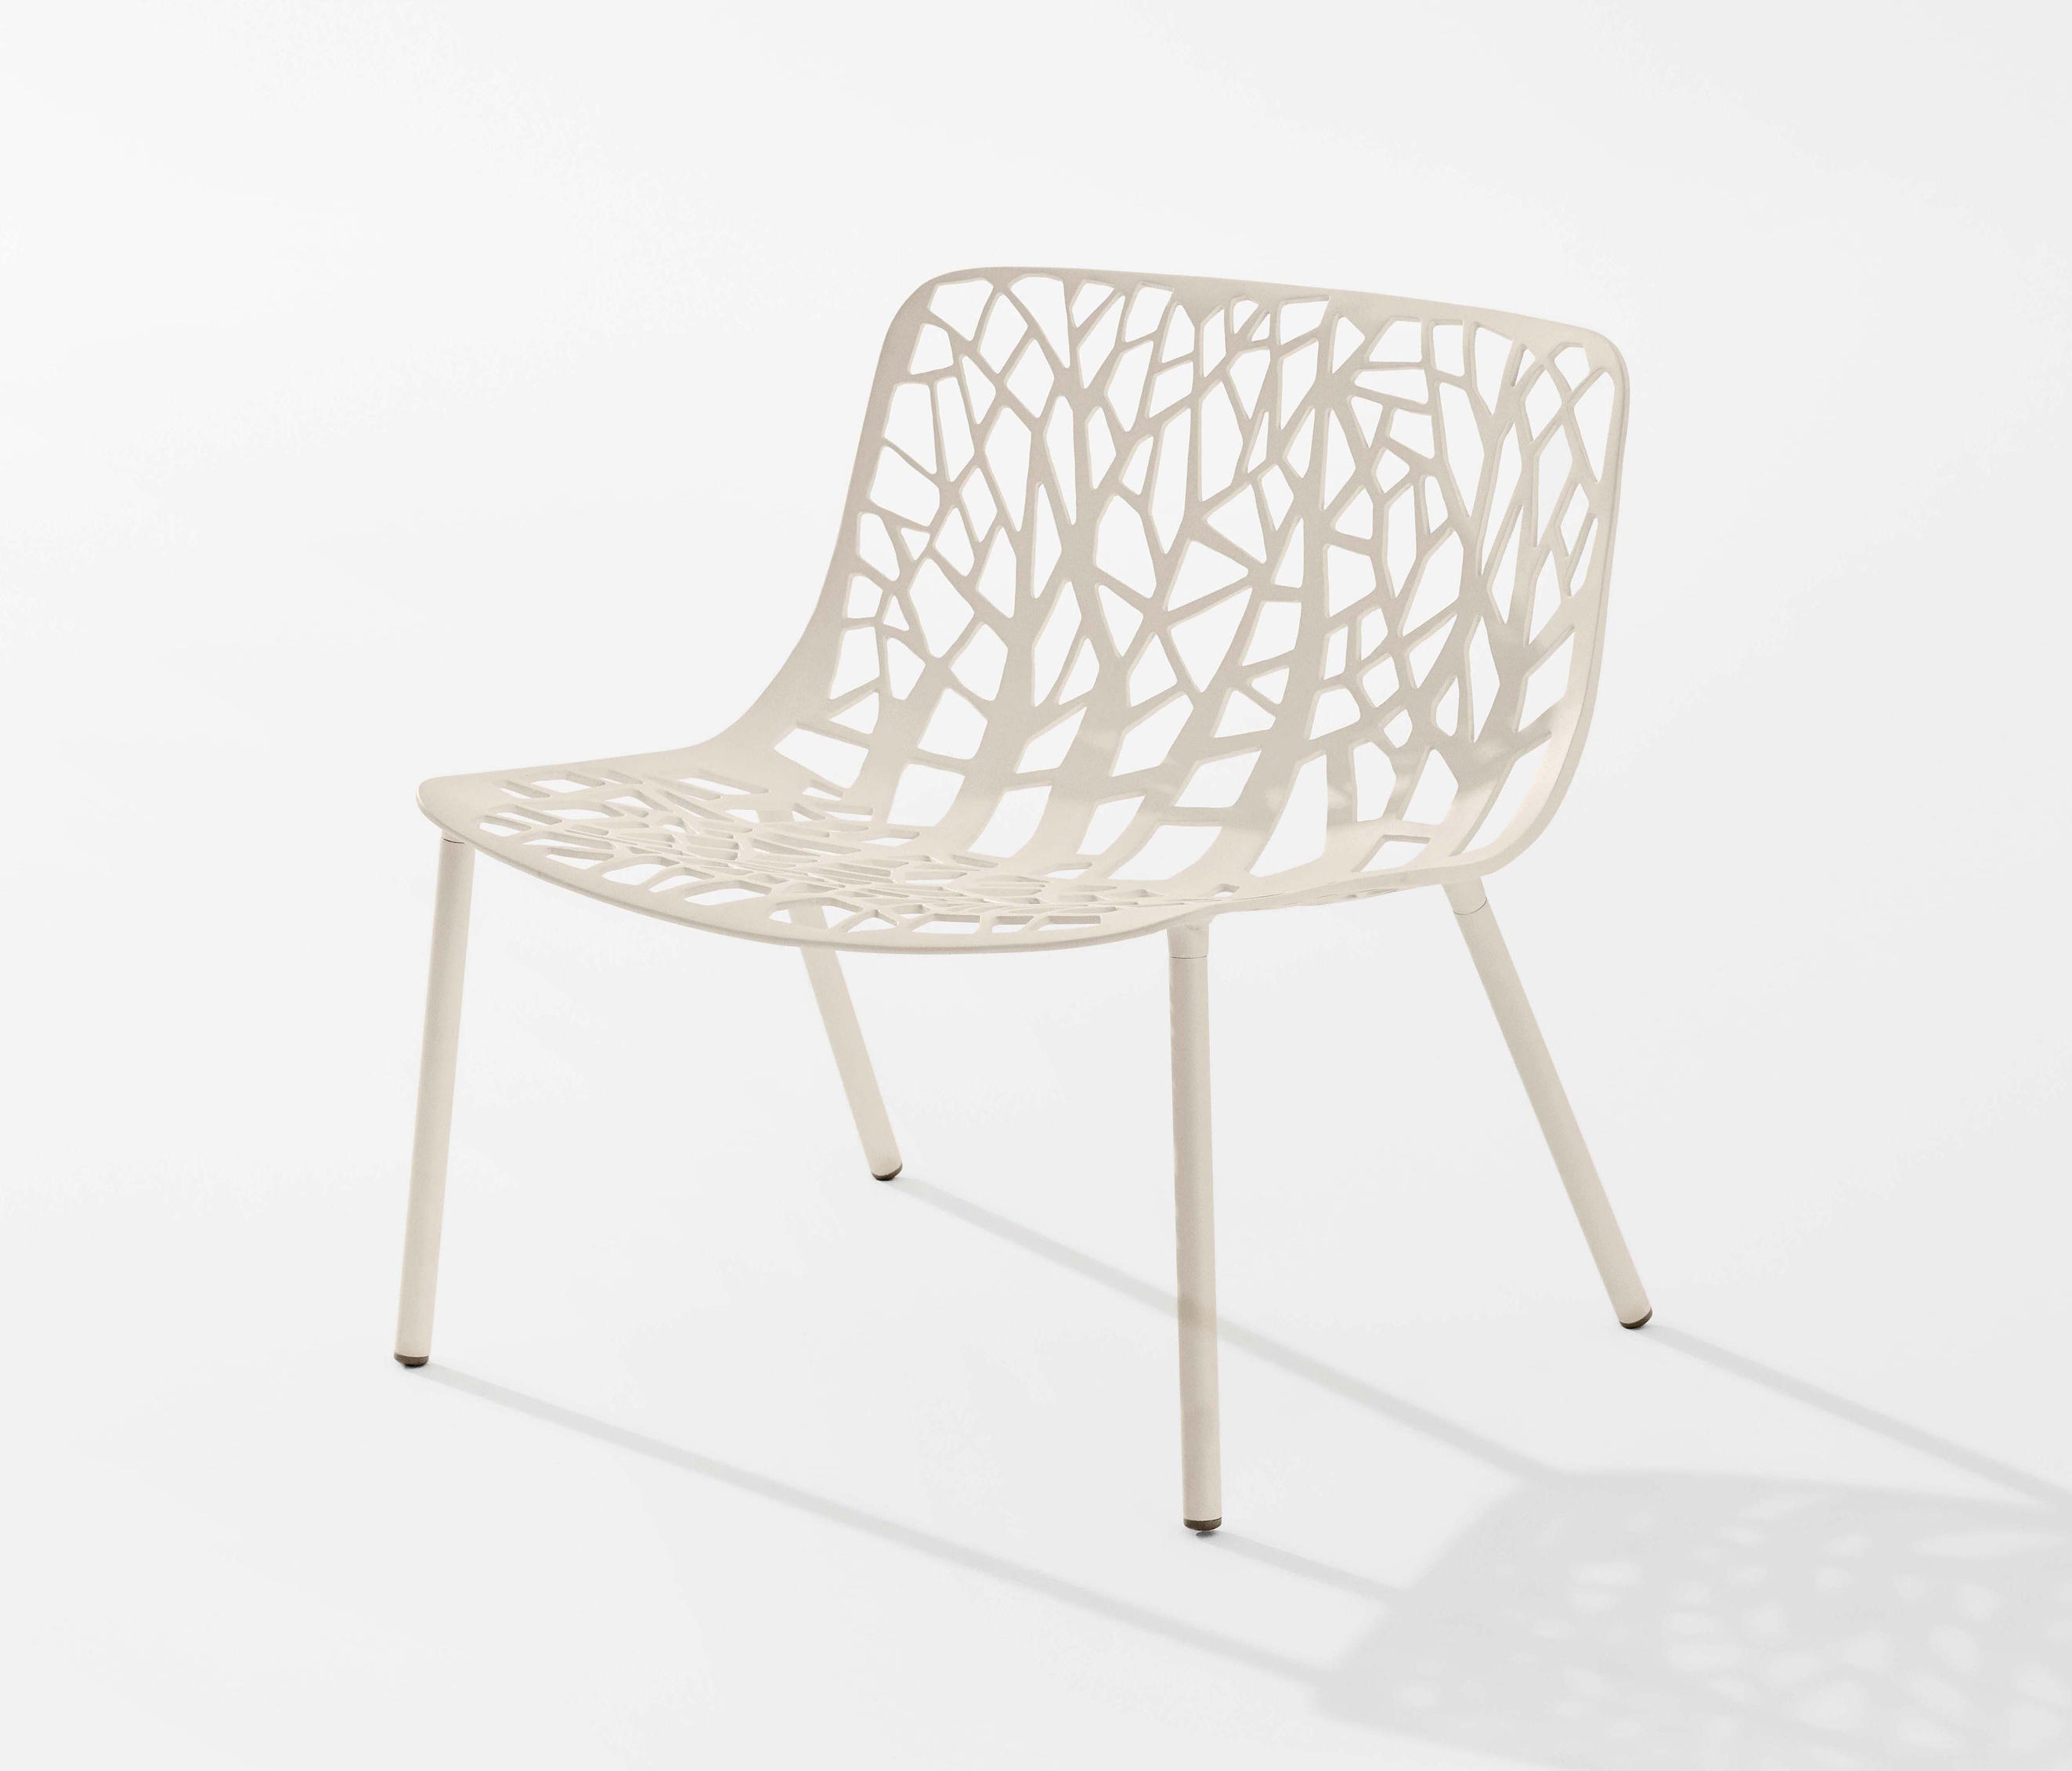 Verbeteren Beeldhouwwerk Donder Forest lounge armchair & designer furniture | Architonic